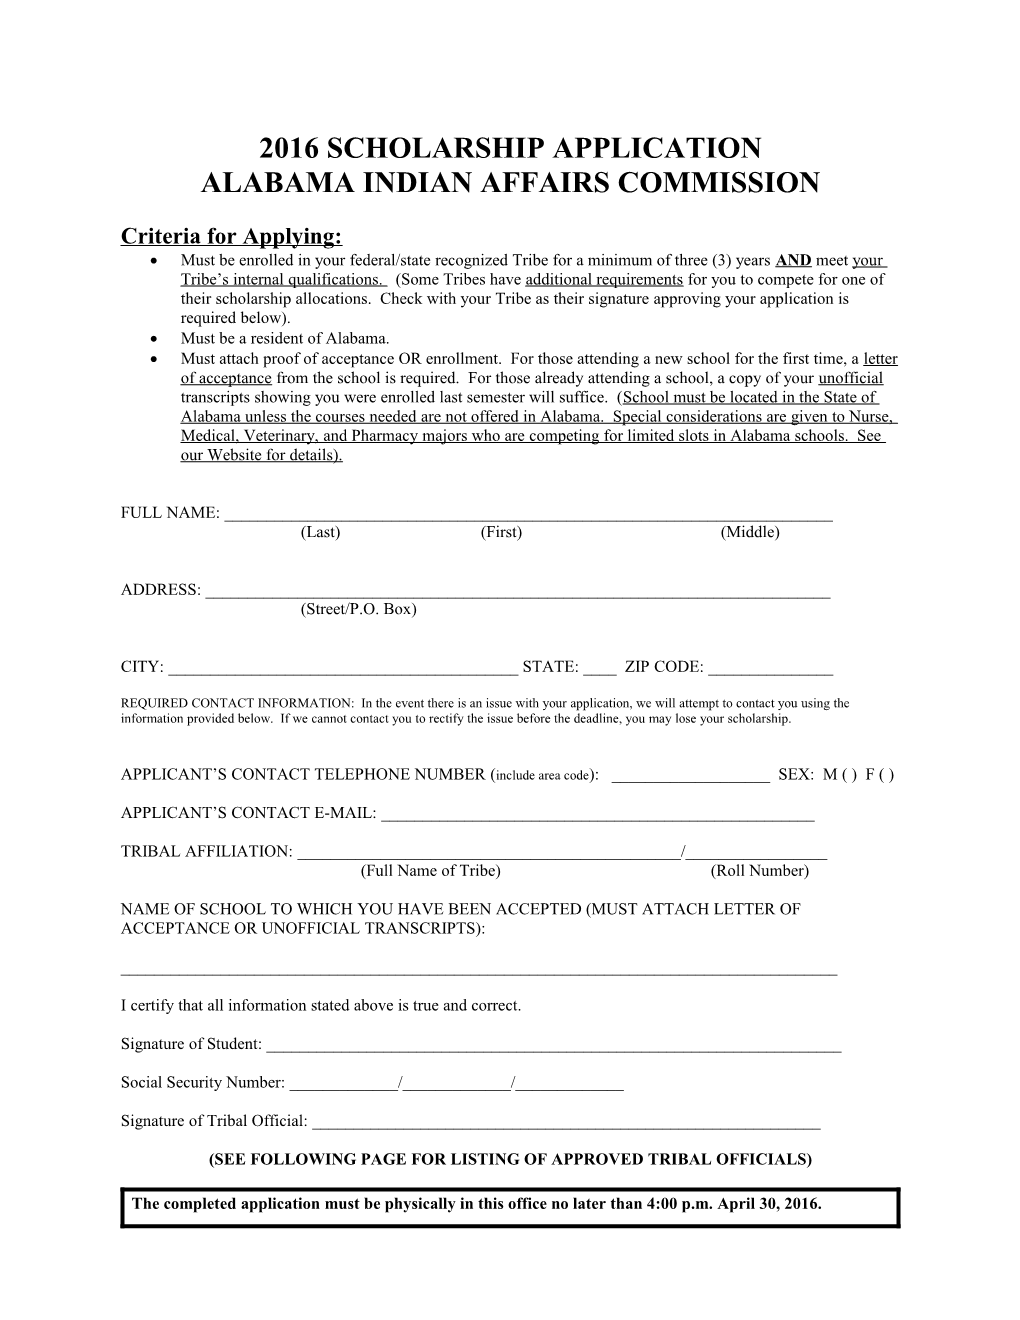 Alabama Indian Affairs Commission